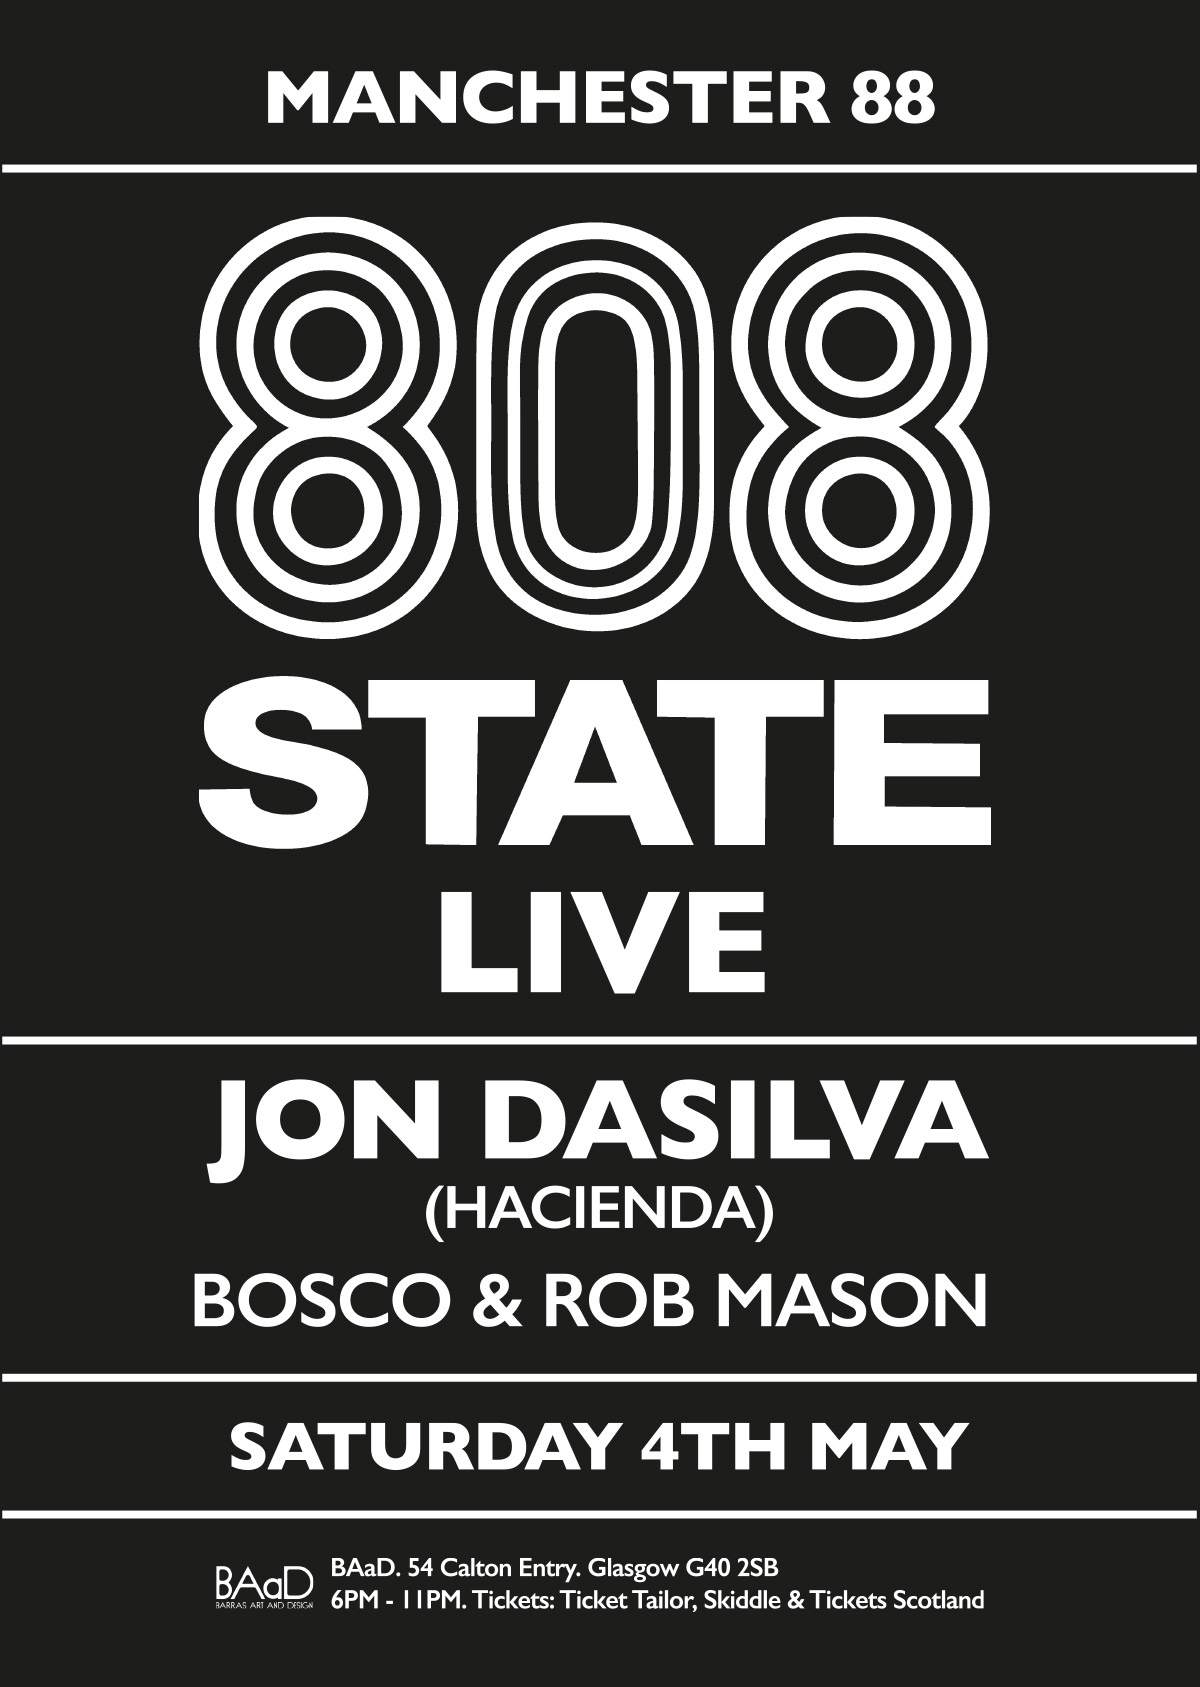 808 State (live) Jon Dasilva (hacienda) at Manchester 88 - Página frontal